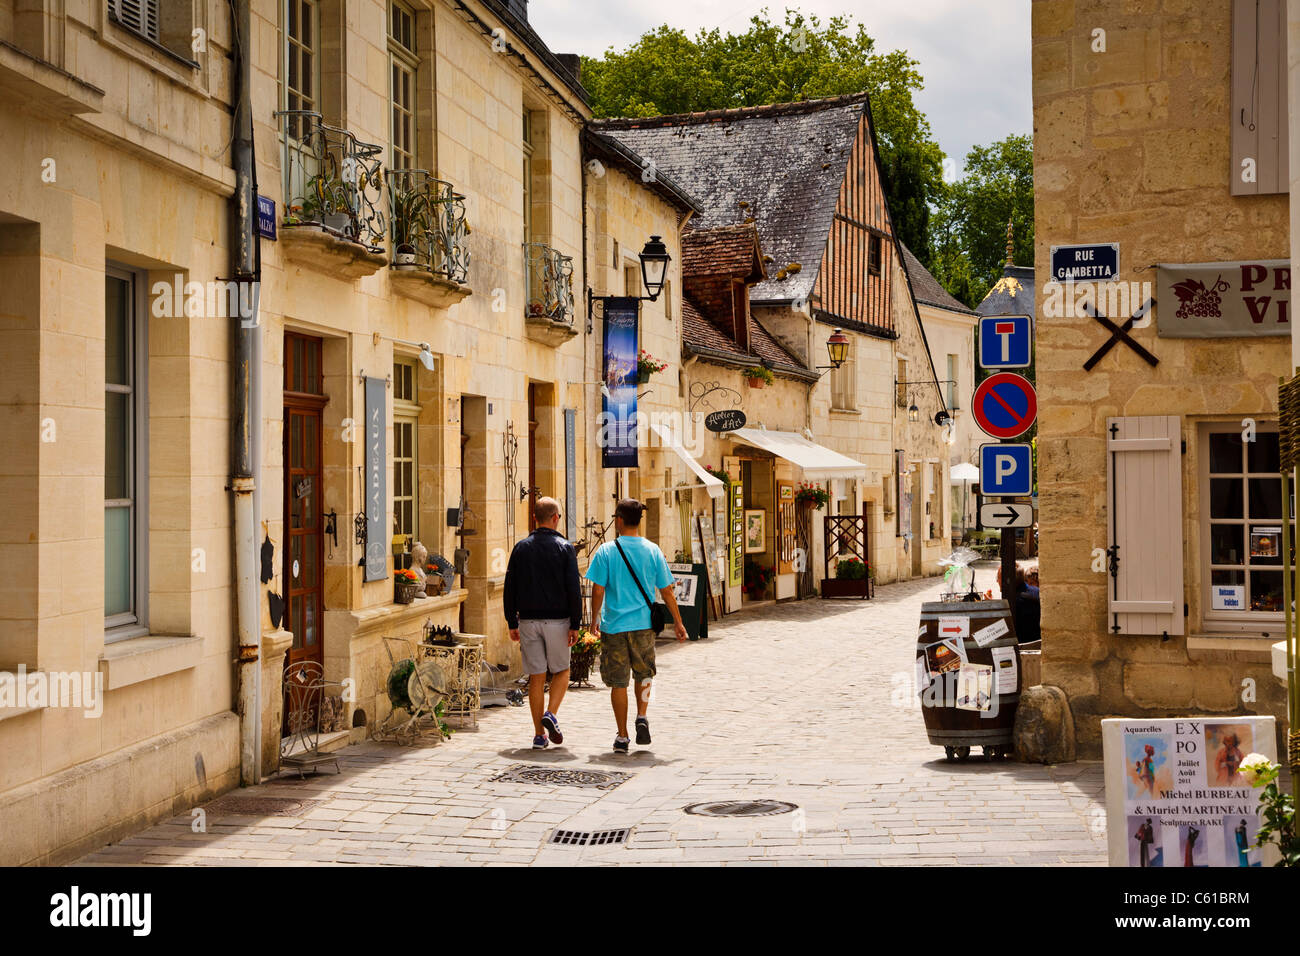 Street scene in village of Azay-le-Rideau, Indre et Loire, France, Europe Stock Photo